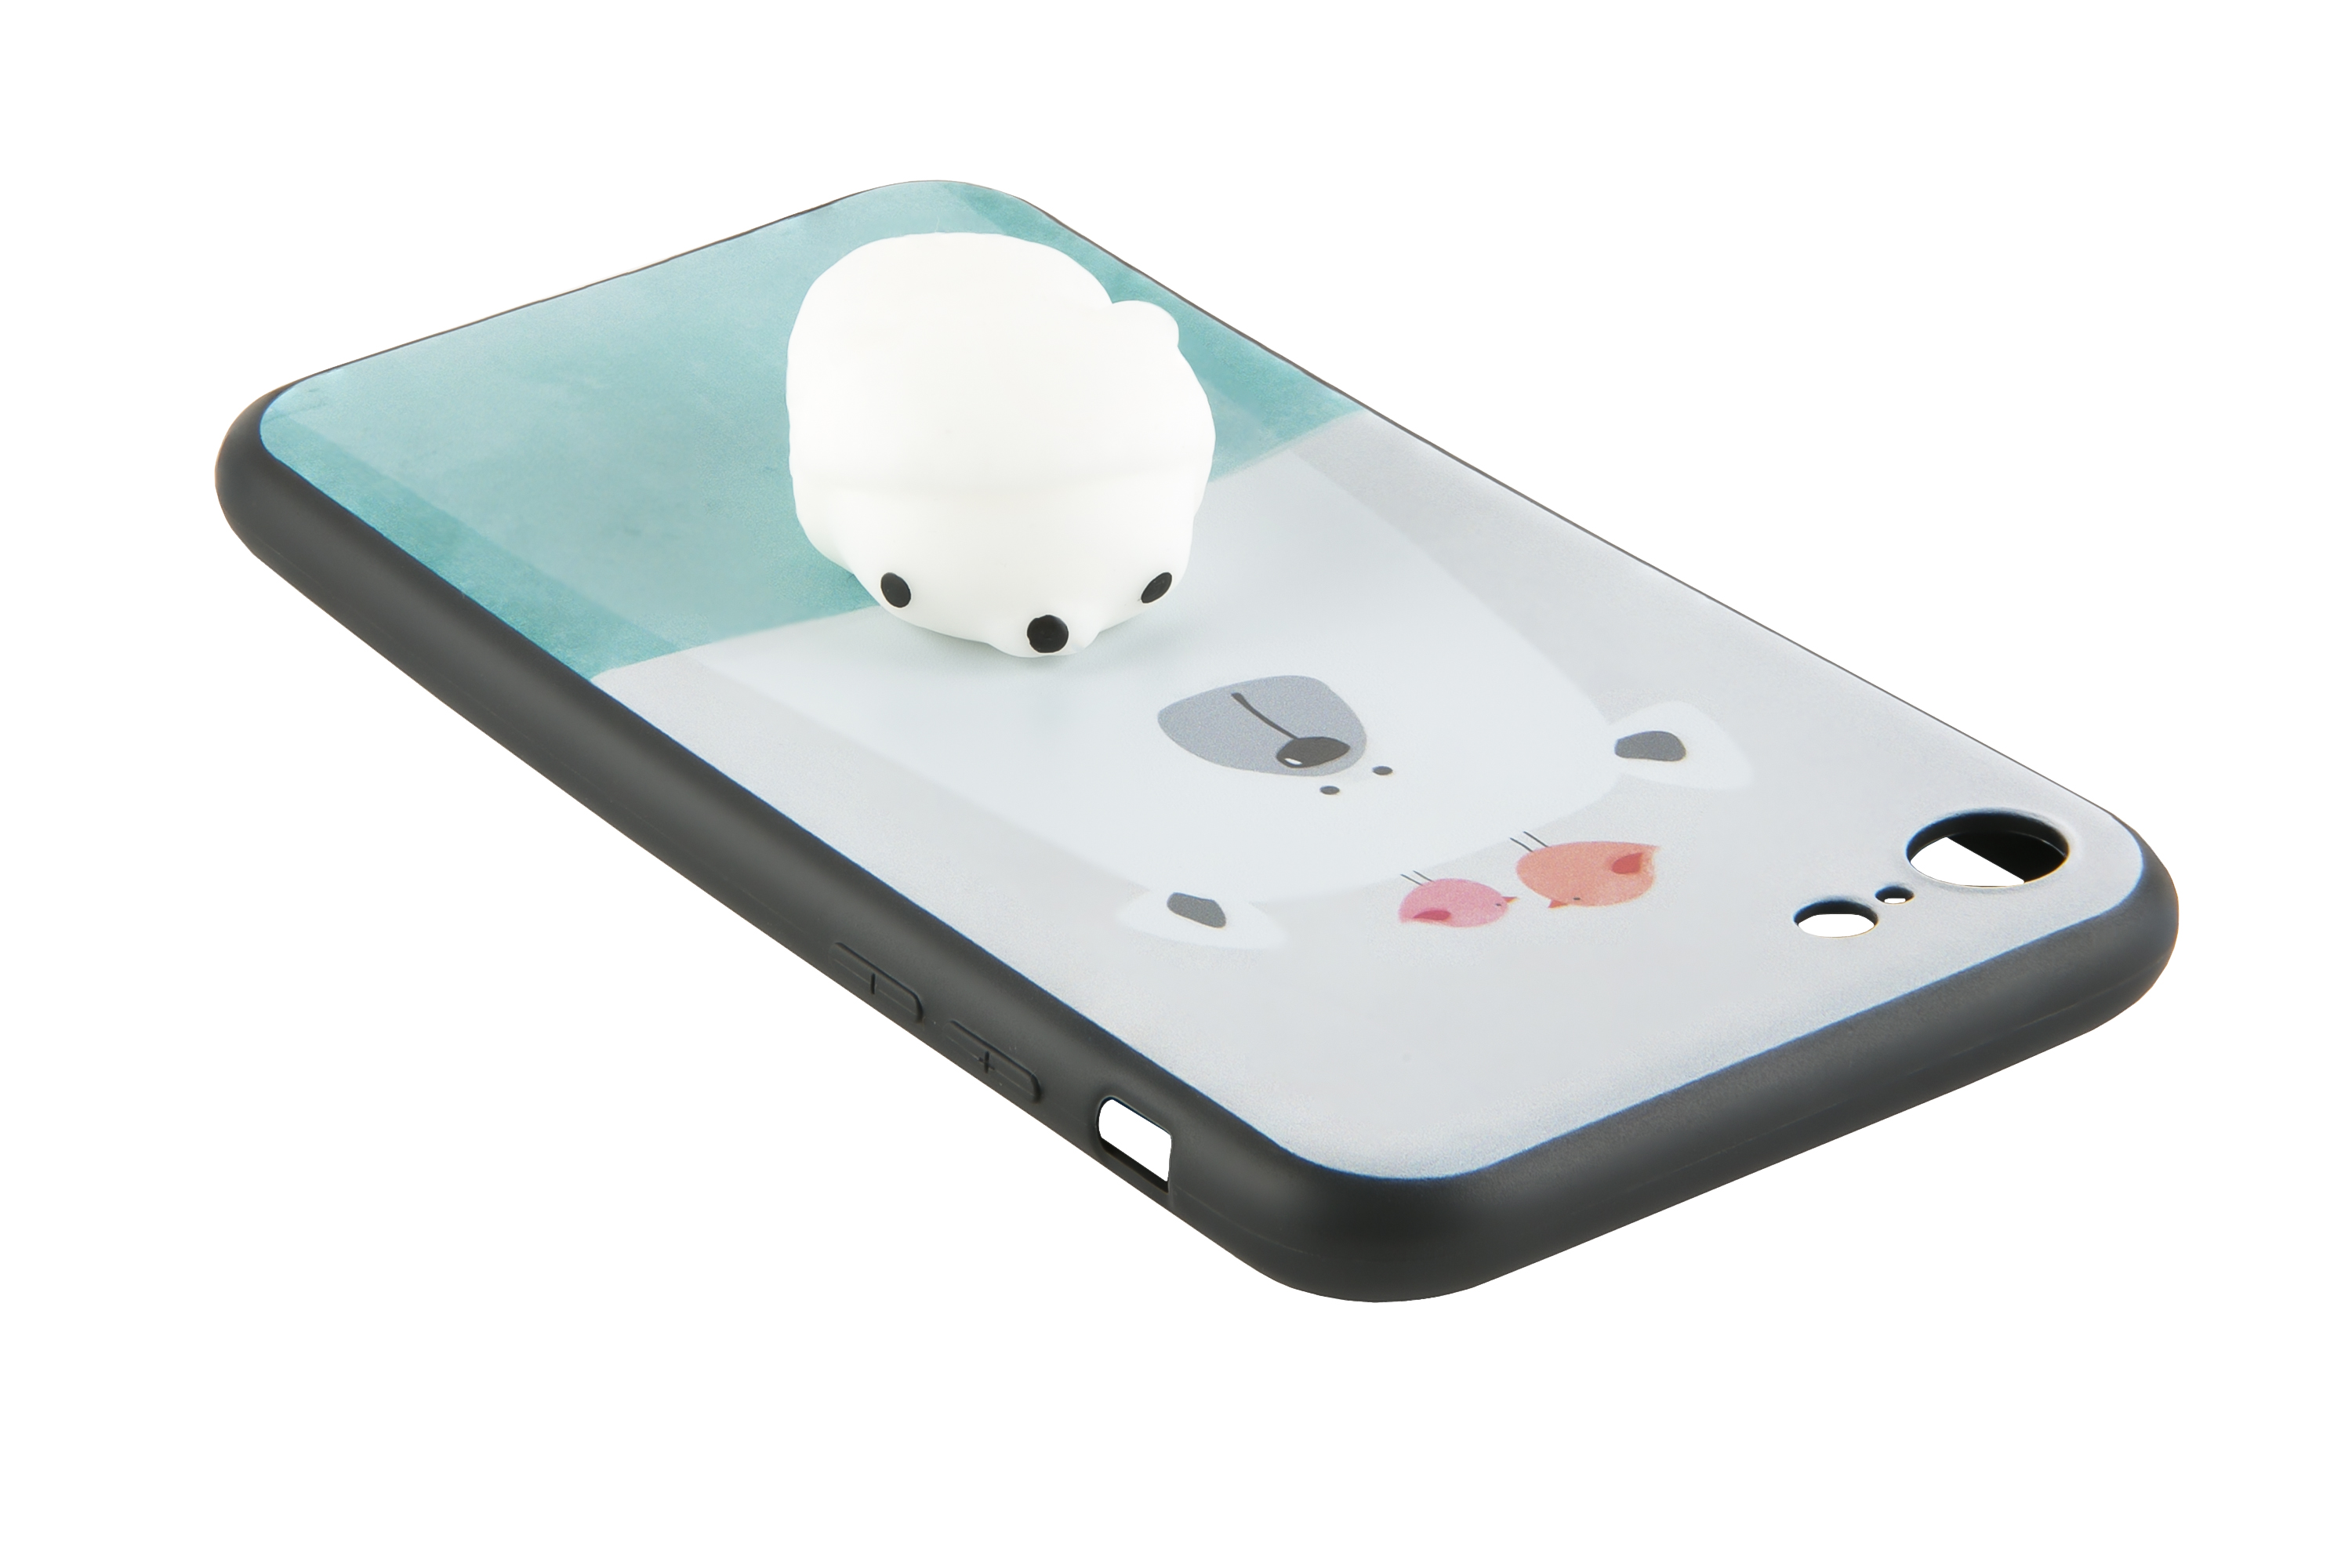 Накладка силикон iBox Crystal Jelly Case для Apple iPhone 8, дизайн №7